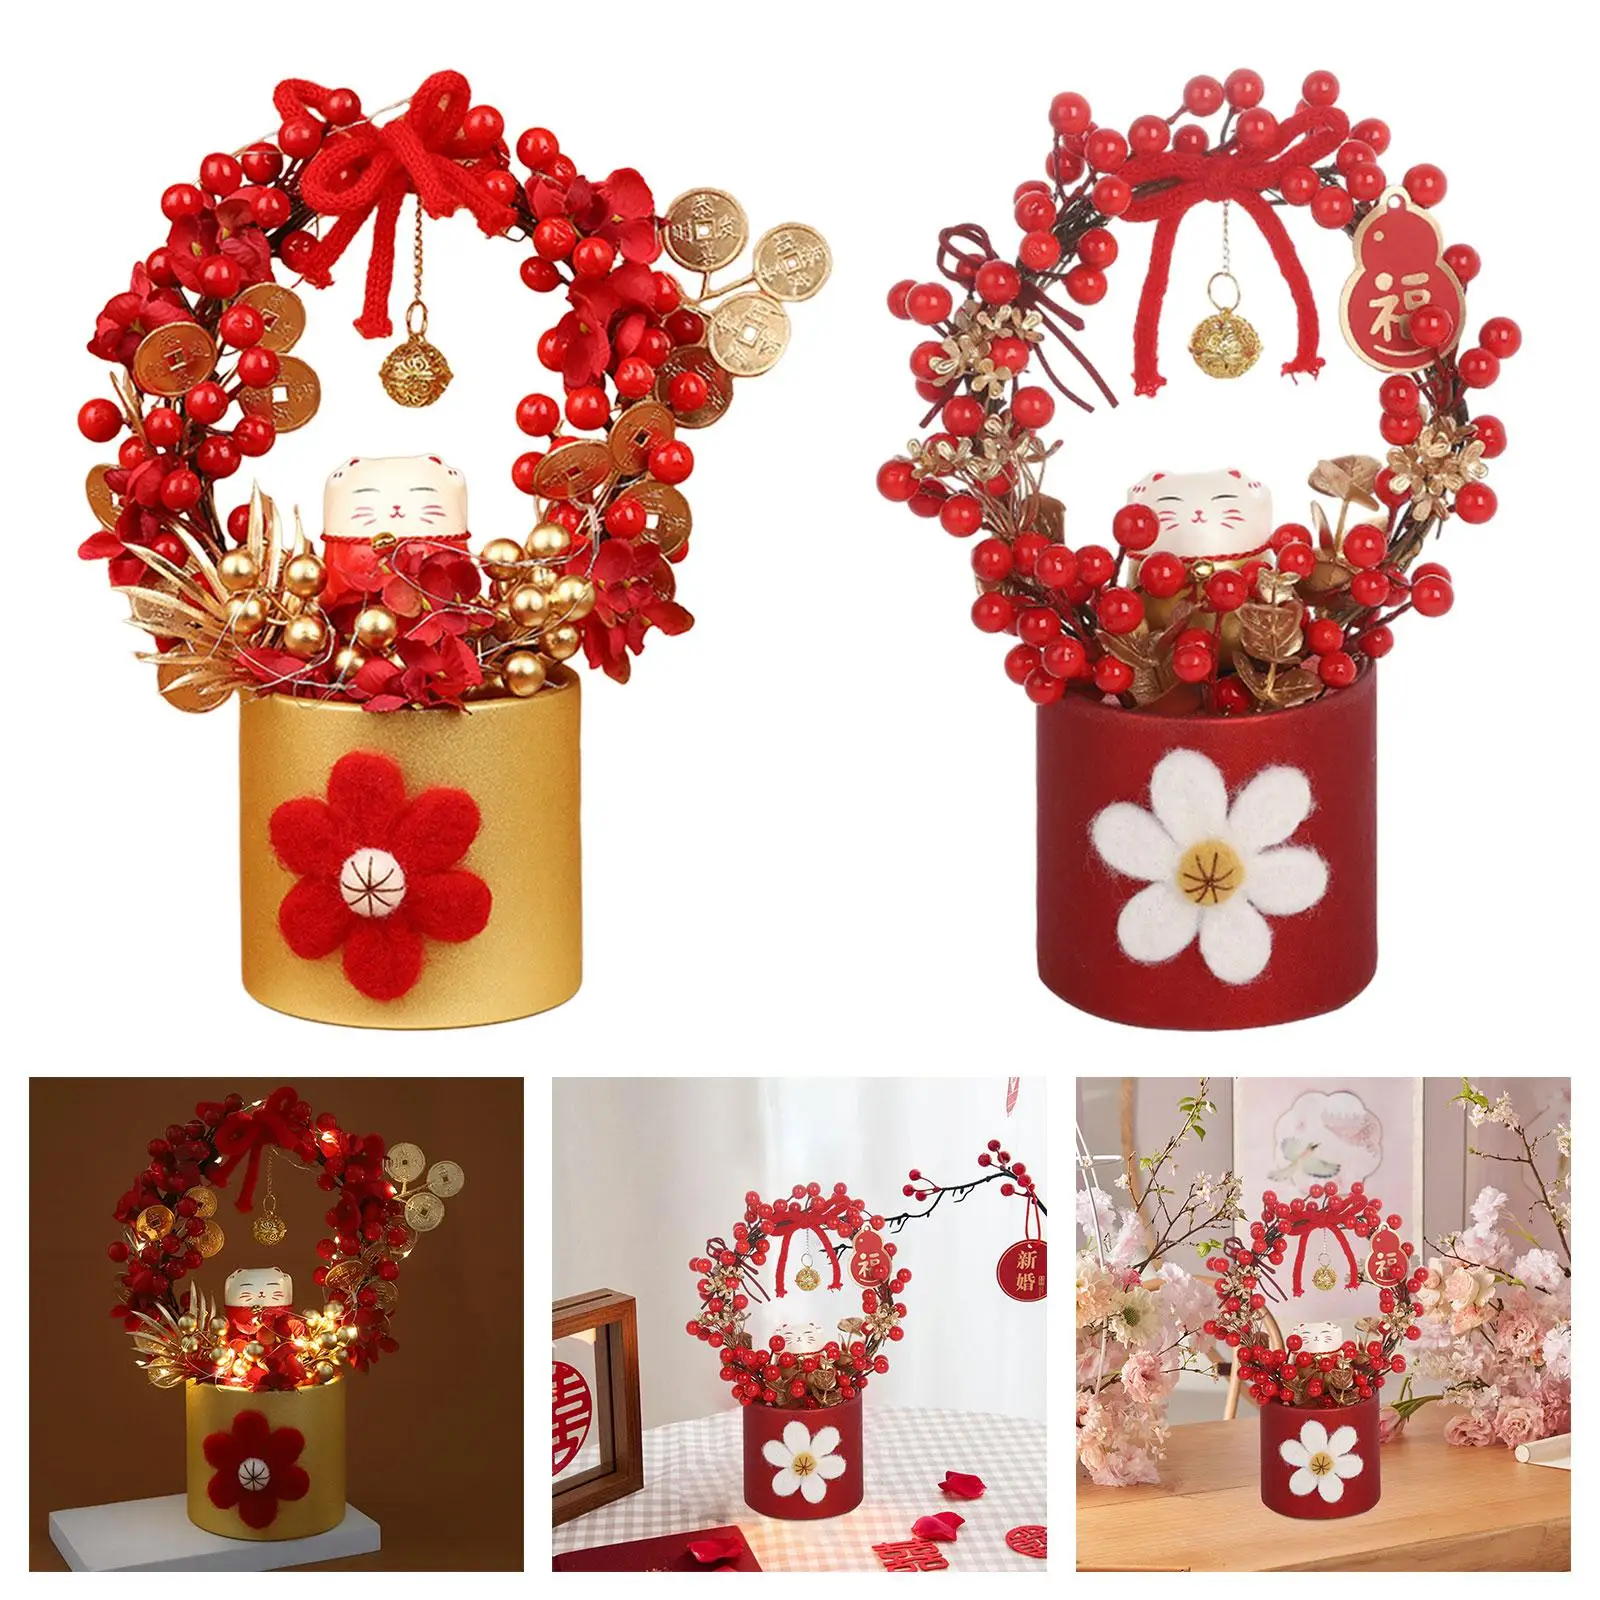 Chinese r Year Decoration Desktop Bonsai Flower Arrangements Ornament for Birthday Spring Festival Indoor Wedding Home Decor